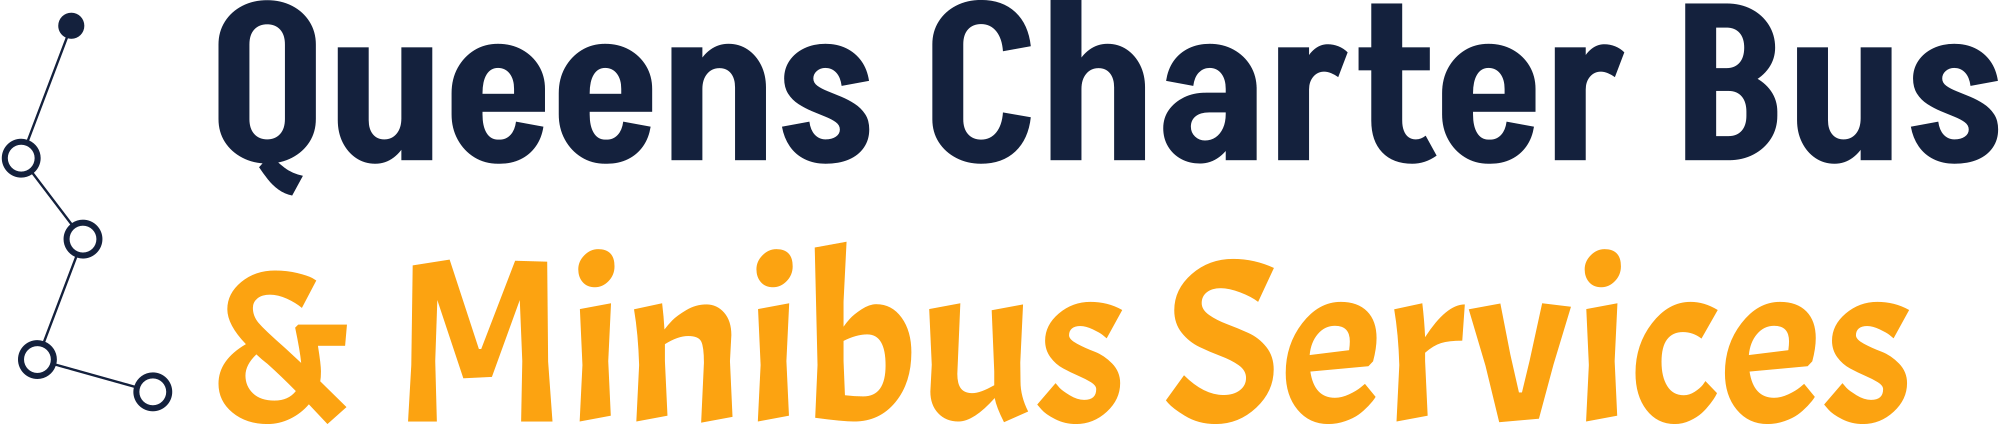 Charter Bus Company Queens logo